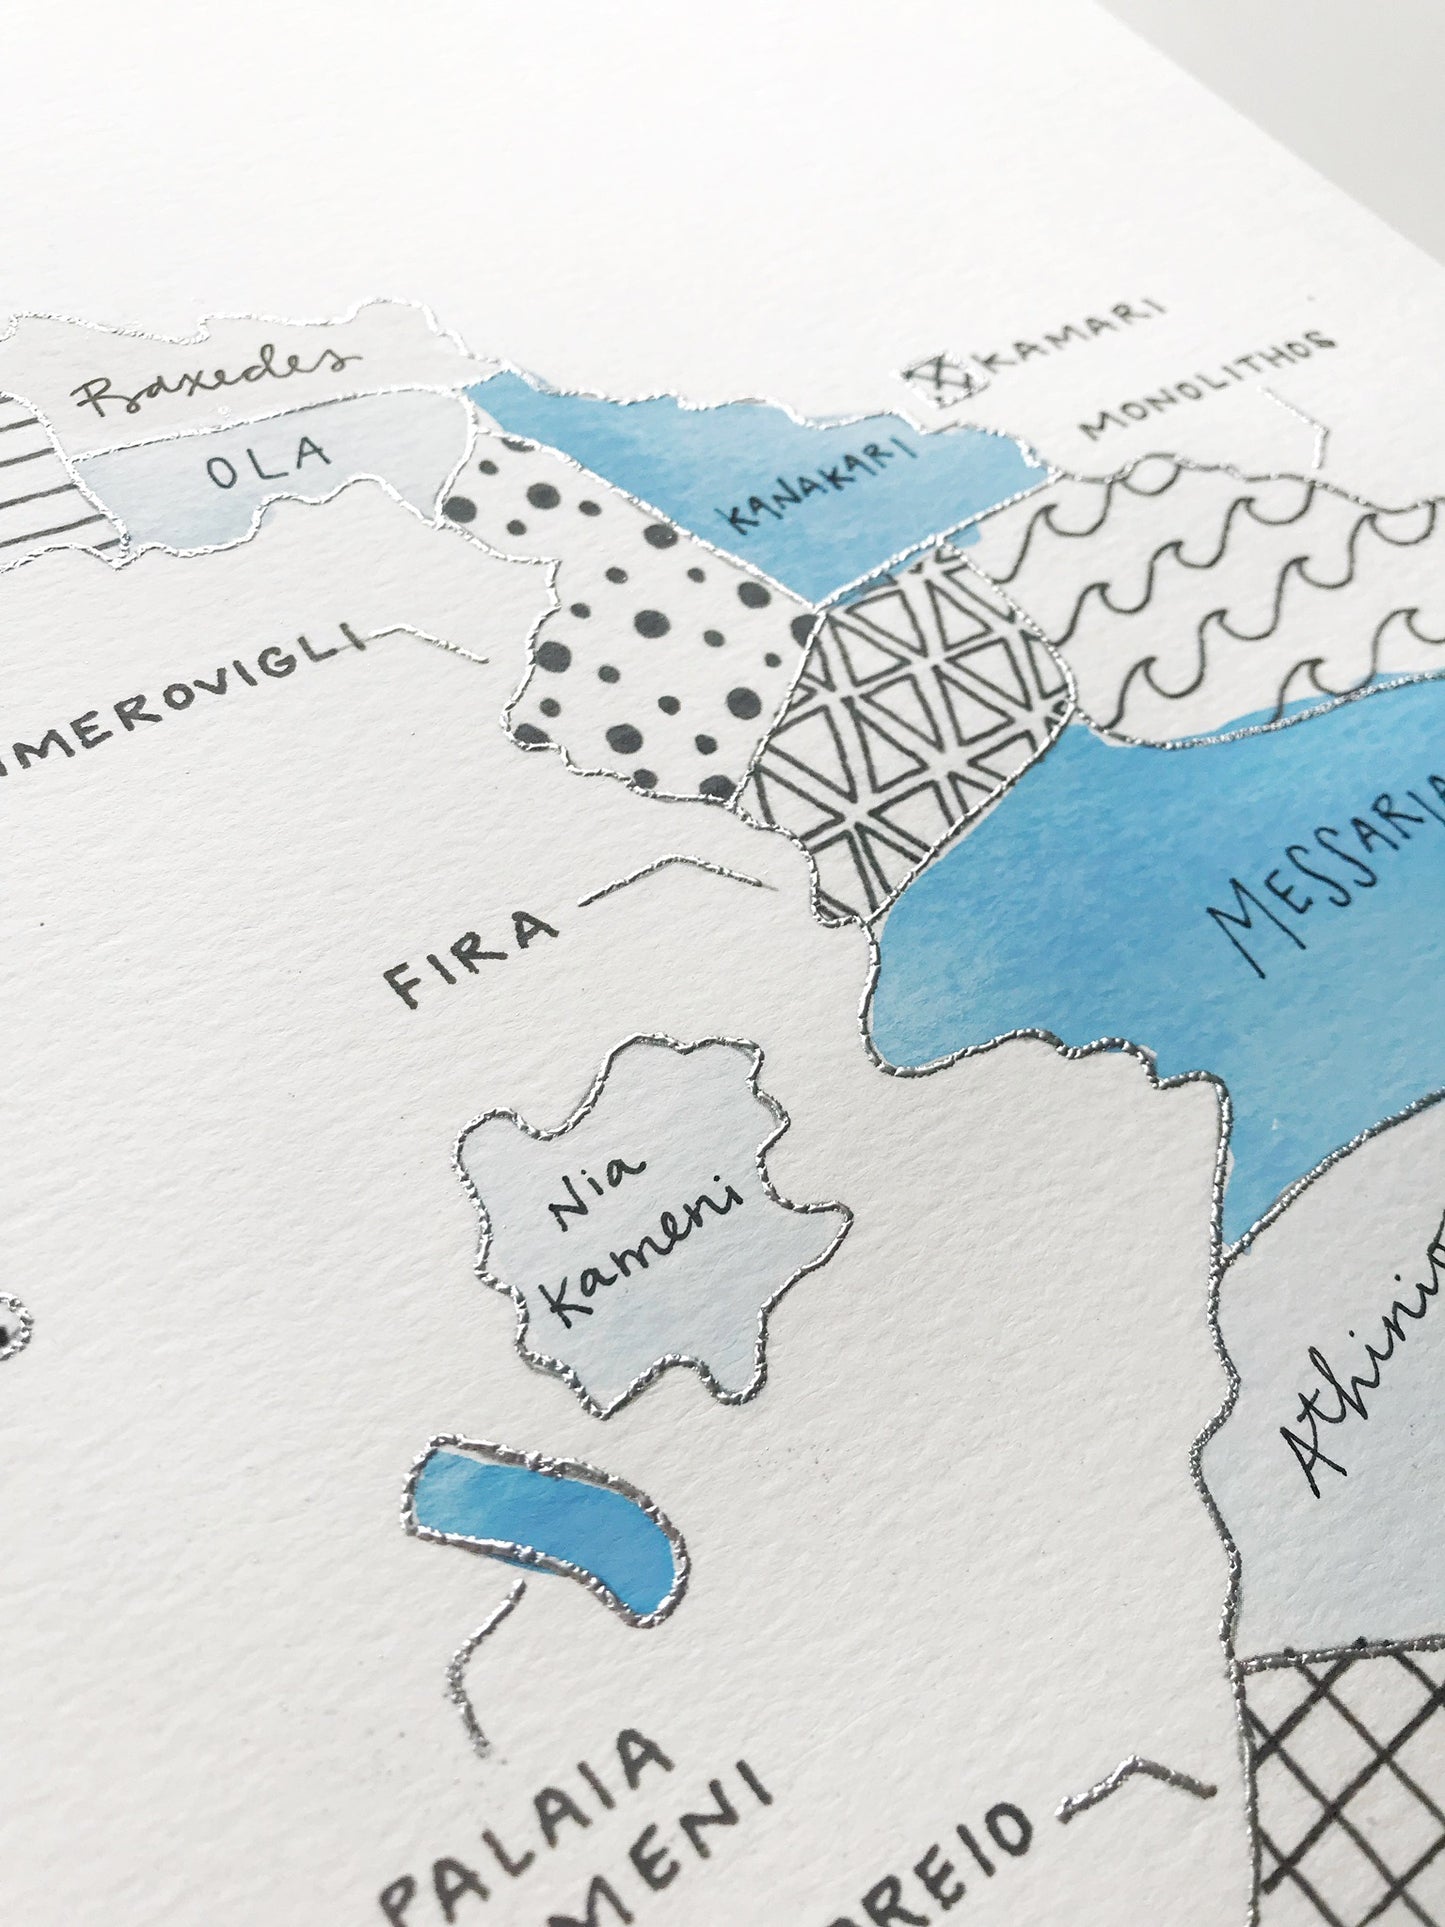 Hand Painted Santorini Map